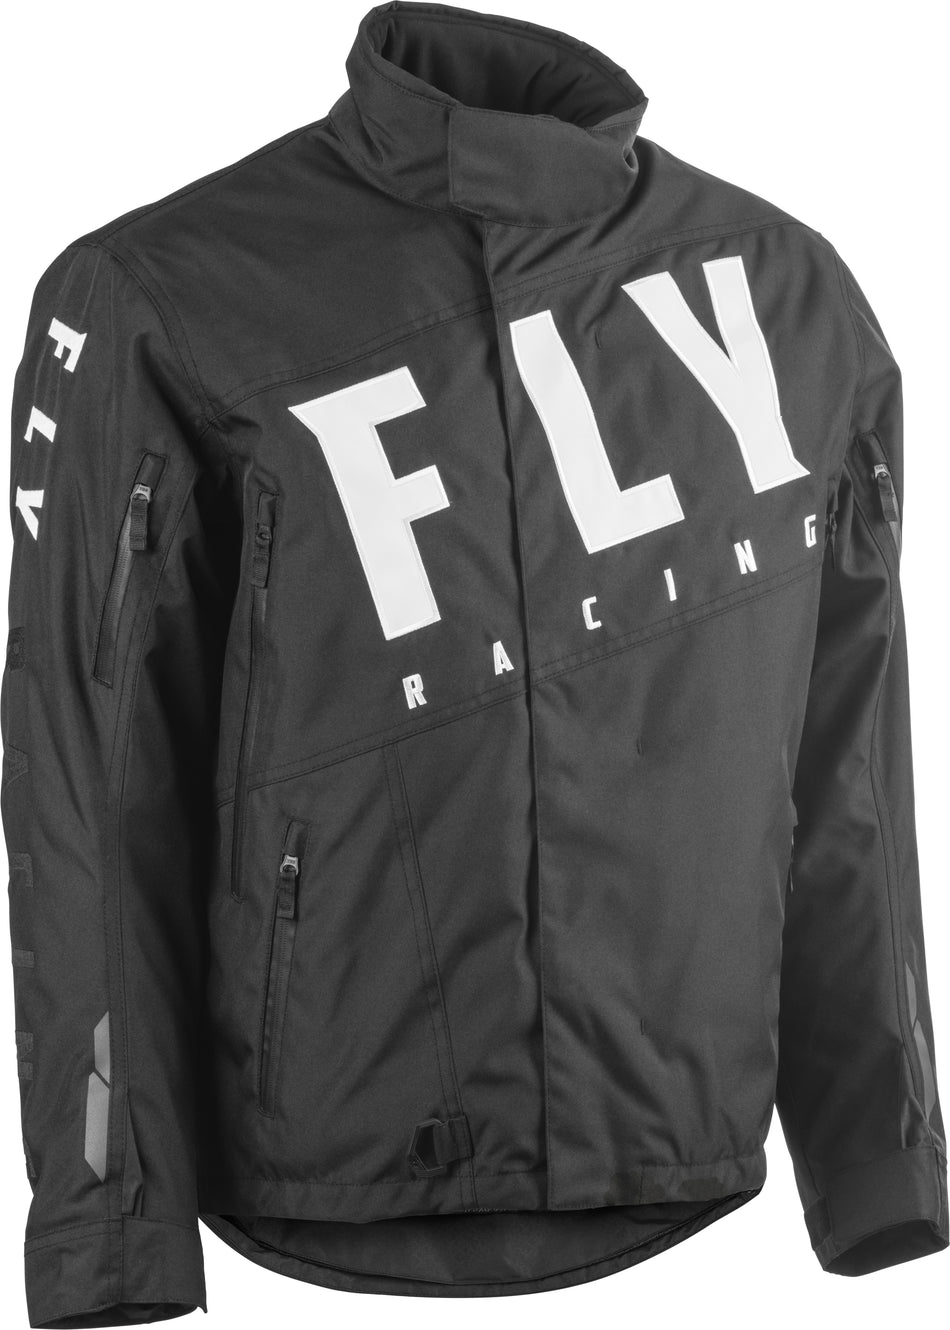 FLY RACING Fly Snx Pro Jacket Black 3x 470-41103X